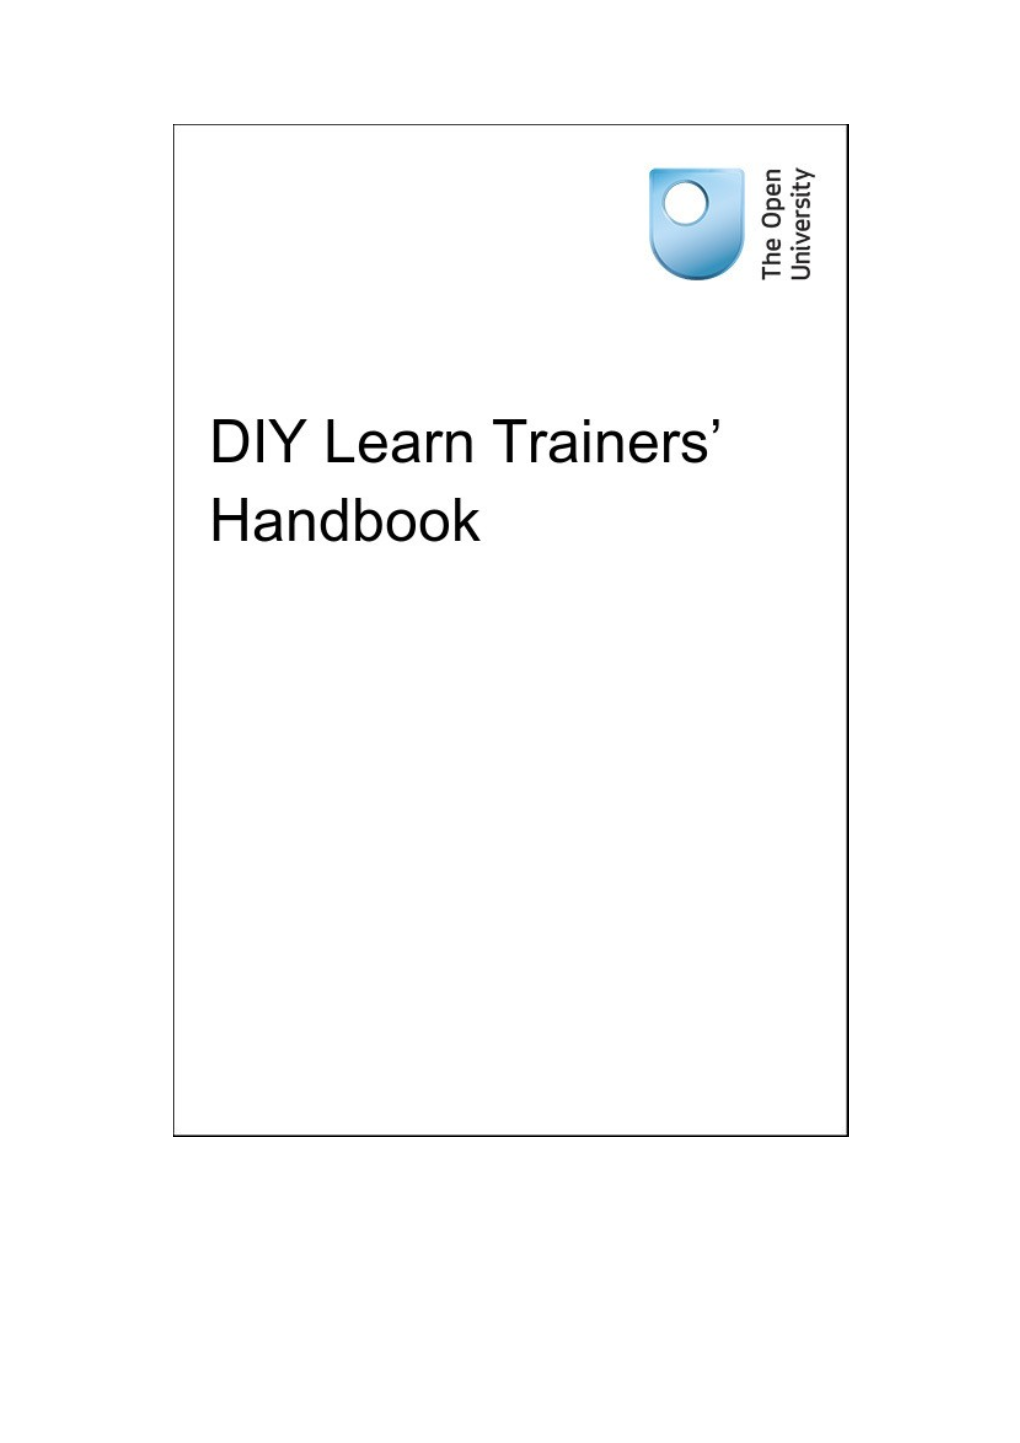 DIY Learn Trainers Handbook